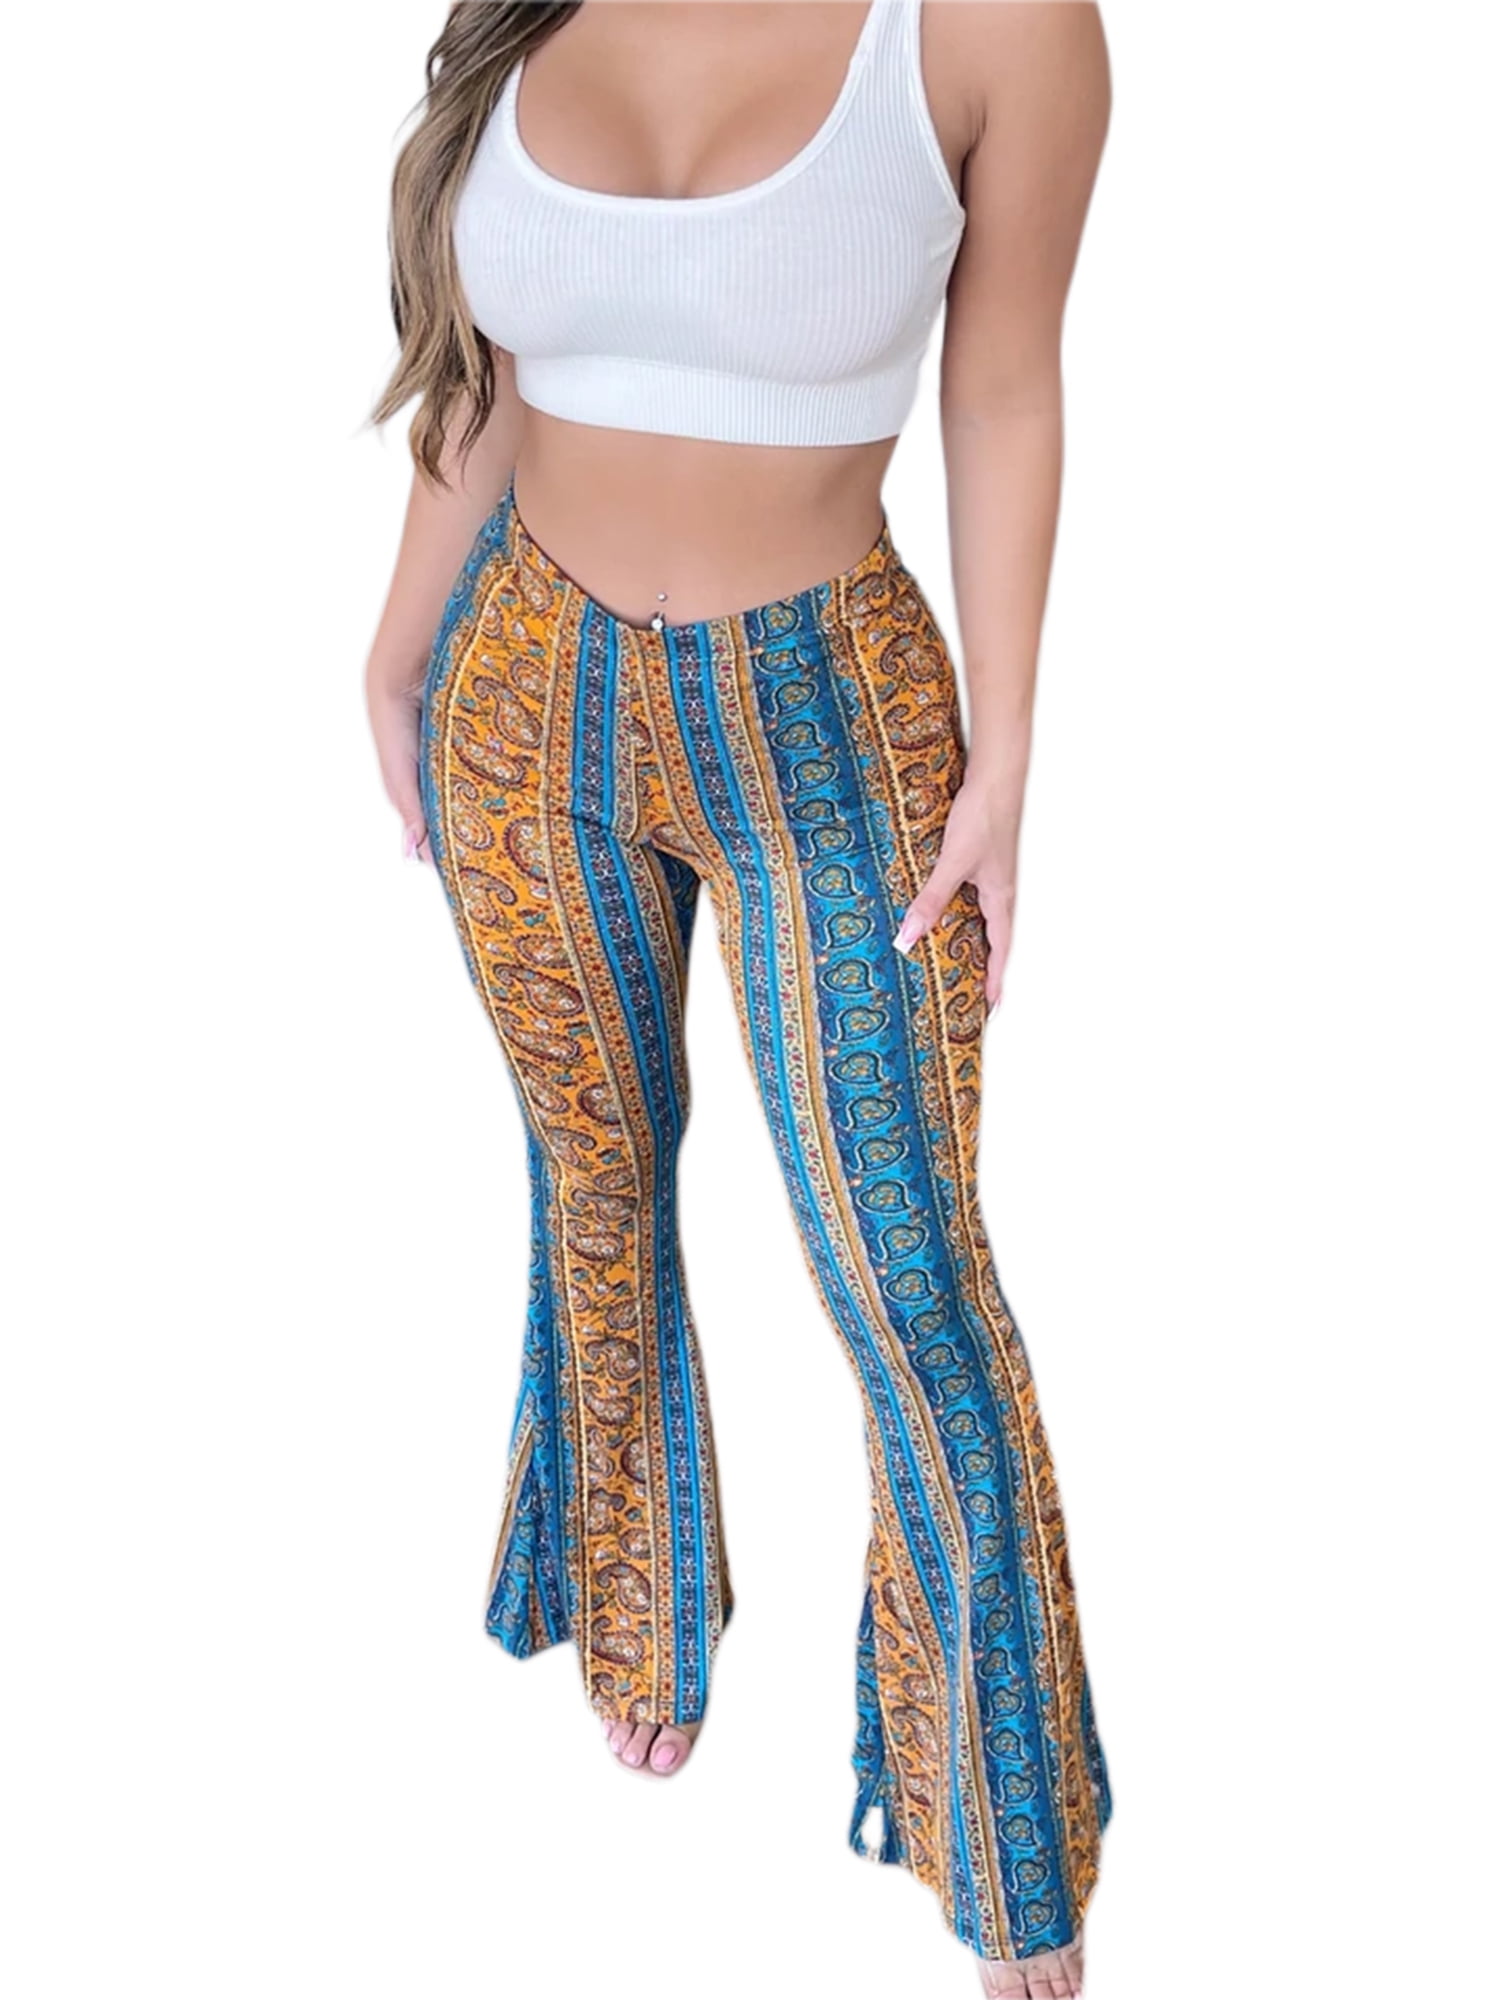 Imcute Women Boho Flare Pants Ethnic Tribal Print Bell Bottom Yoga Palazzo  Hose Trousers Plus Size